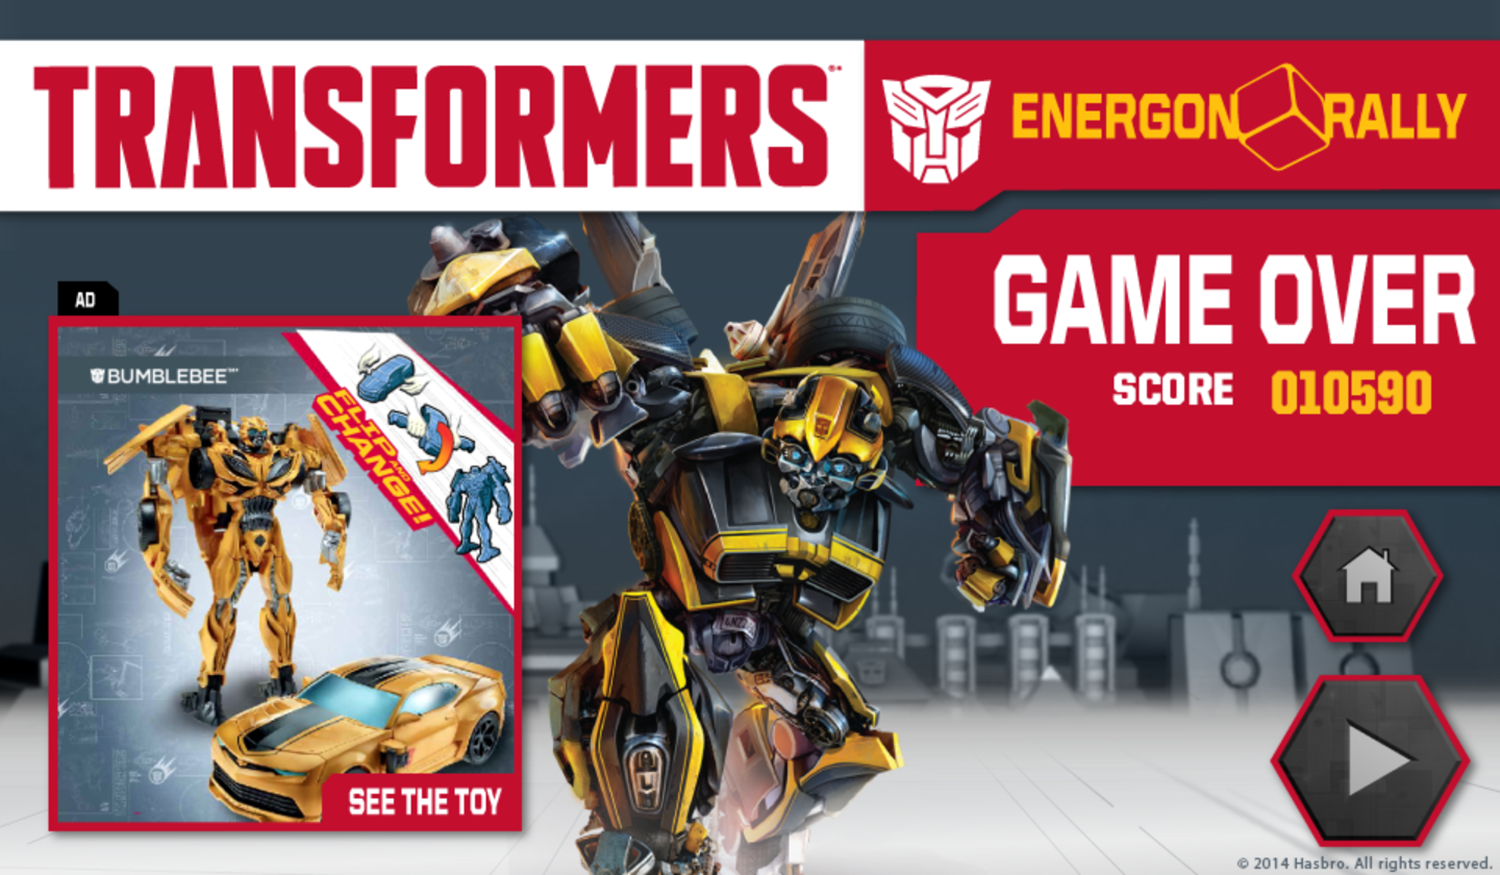 Transformers Energon Rally Game Over Screenshot.